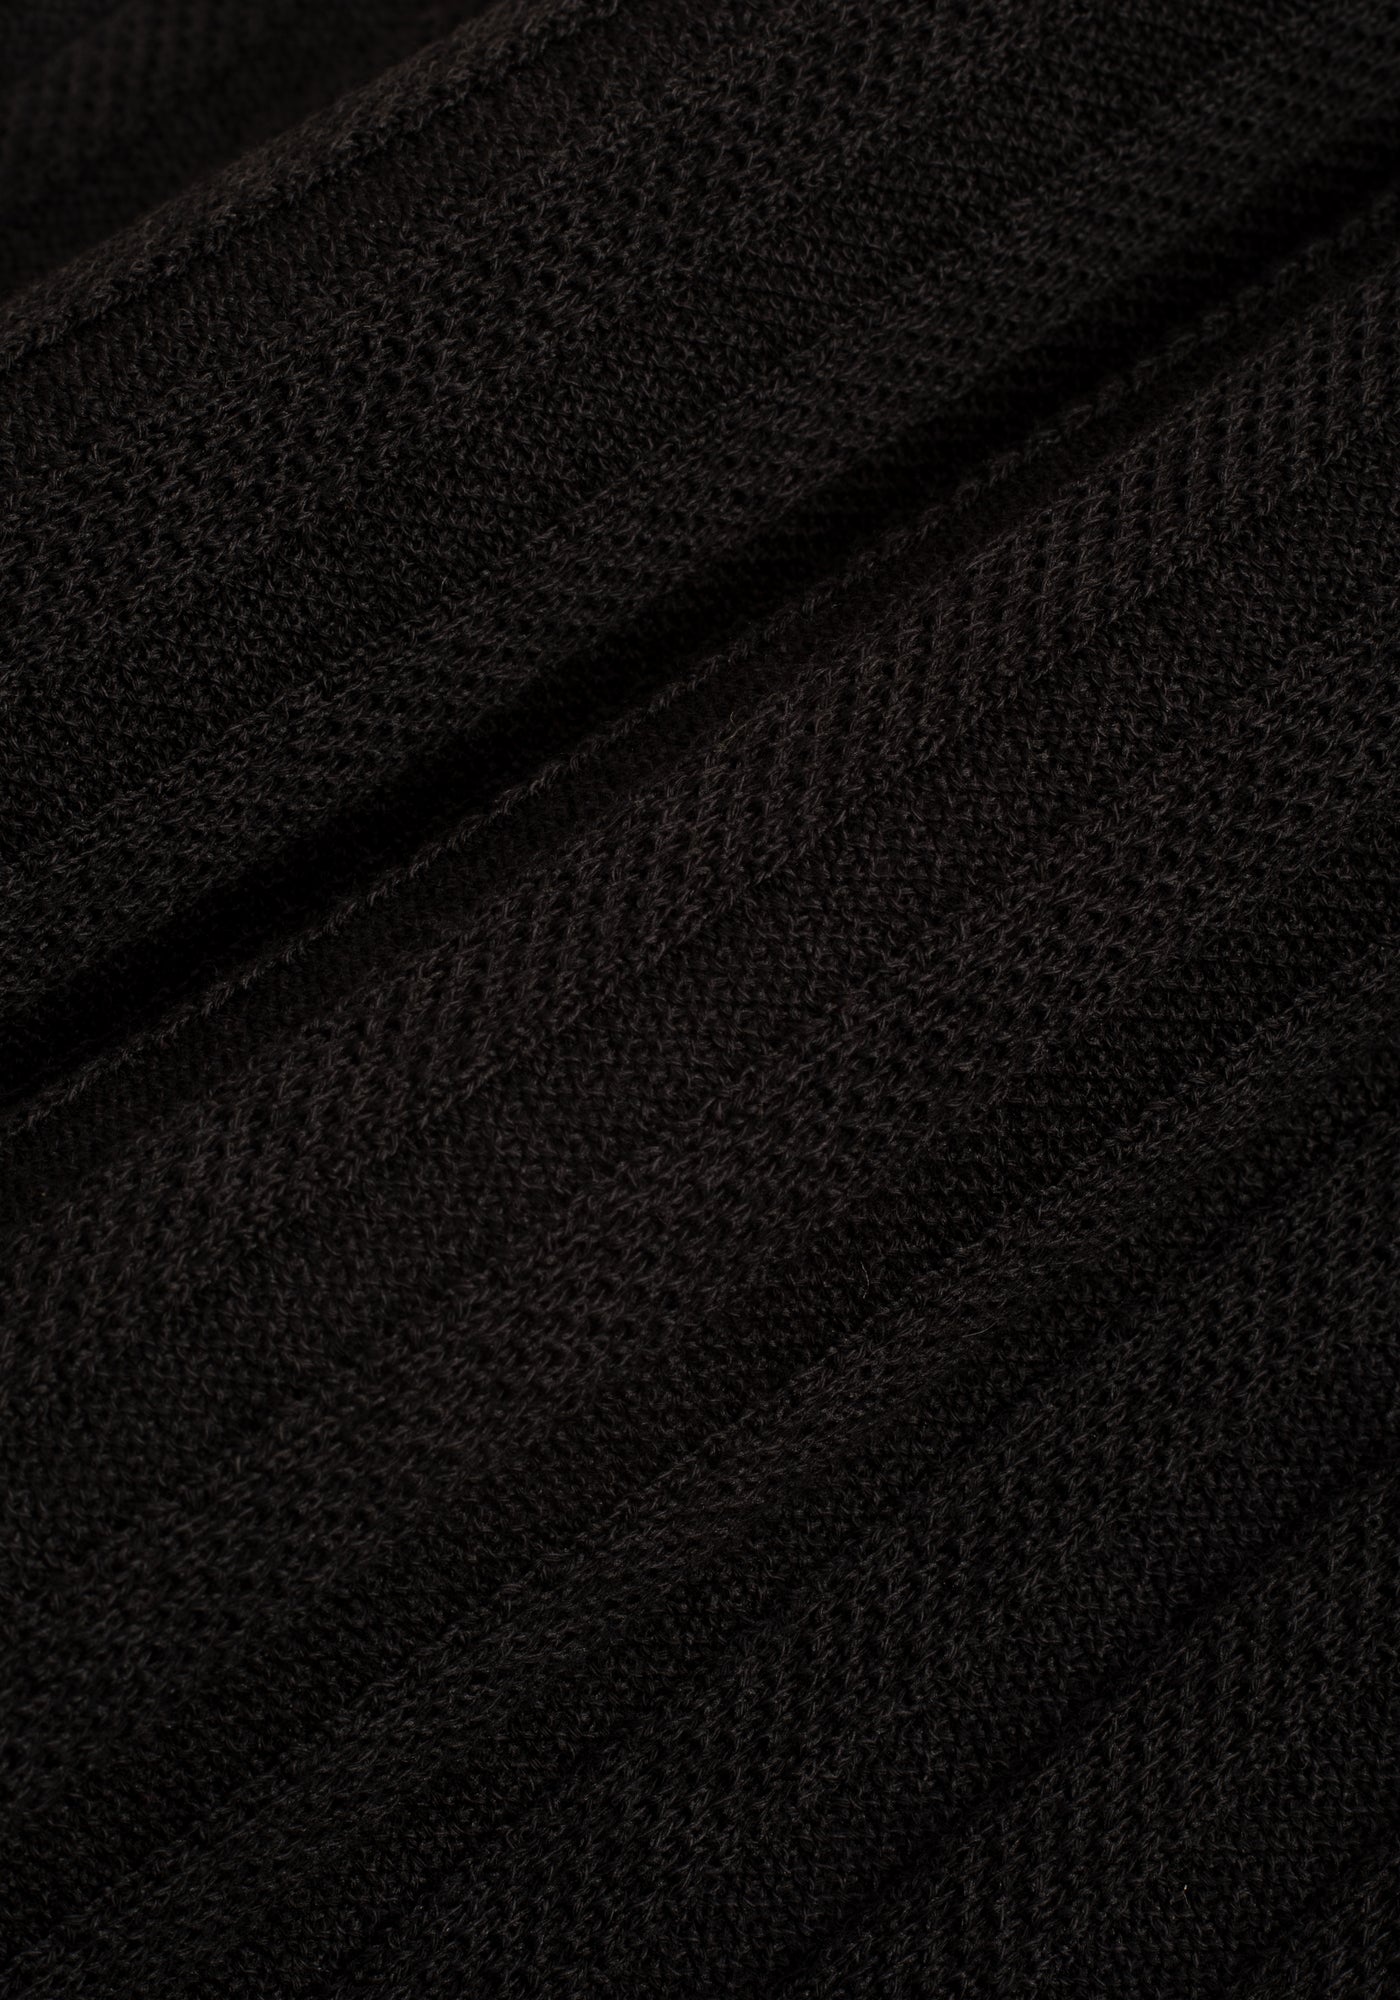 Coal Black Stripe Knitted Polo Shirt